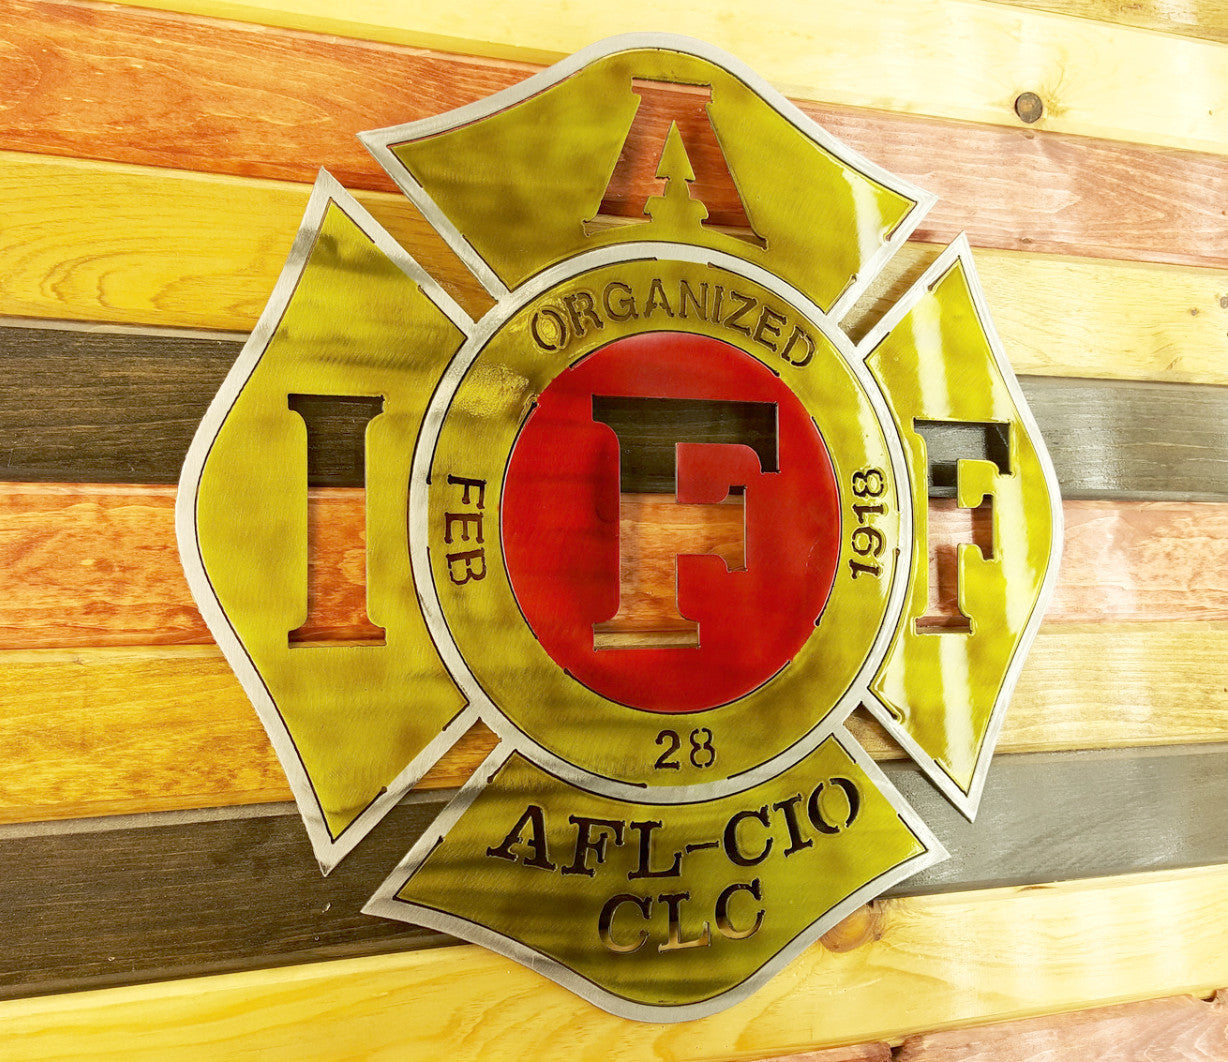 IAFF Fireman's Shield